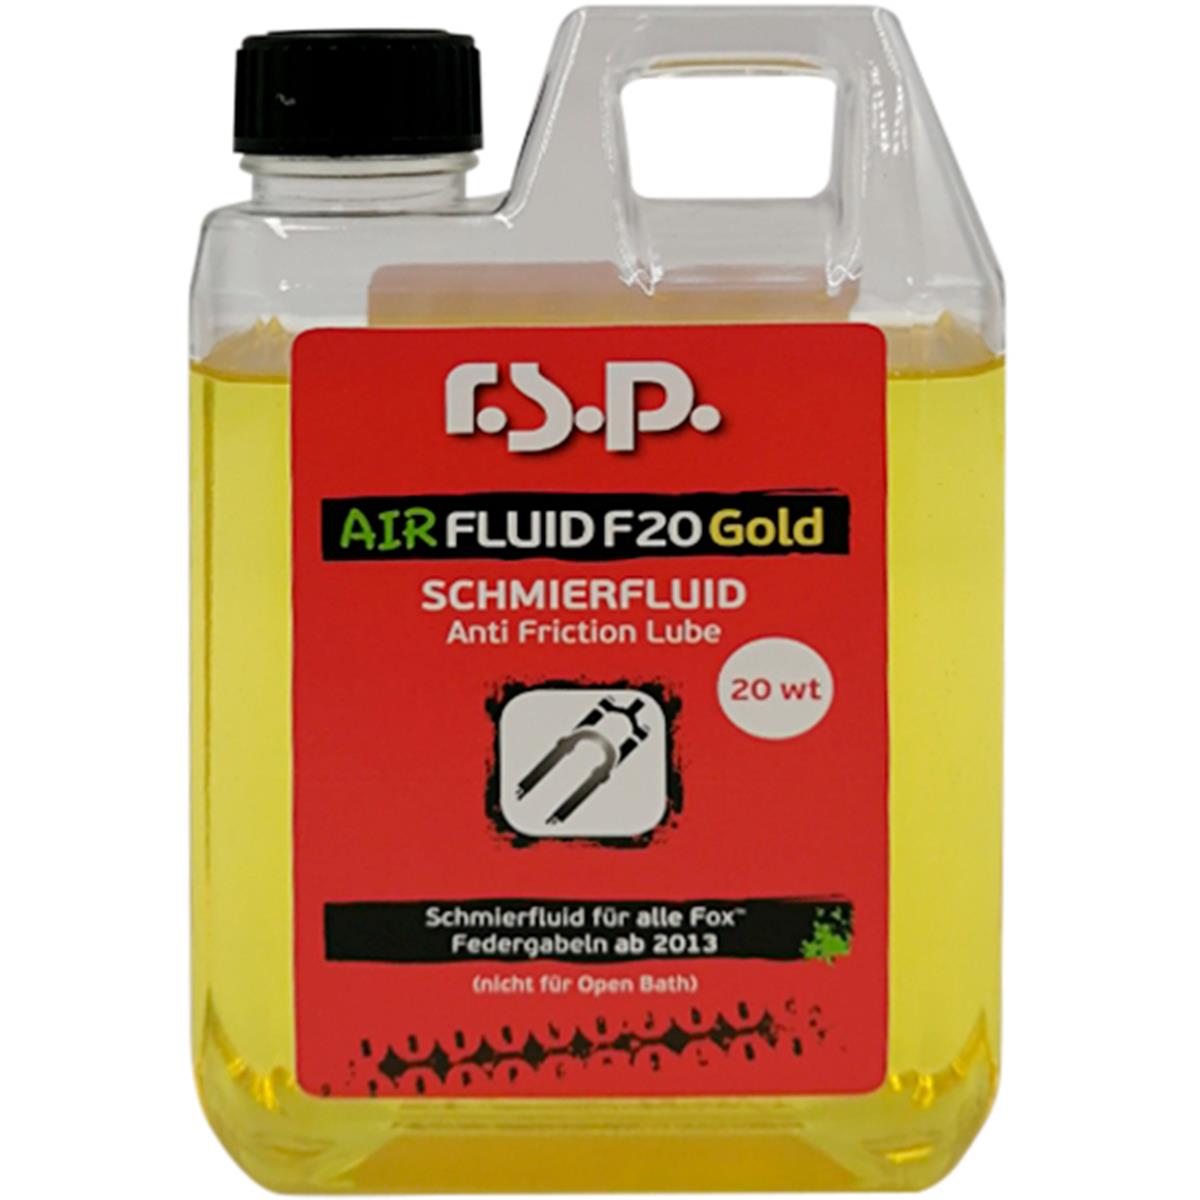 r.s.p. Huile de Suspension Air Fluid F20 Gold 20 WT, 250 ml